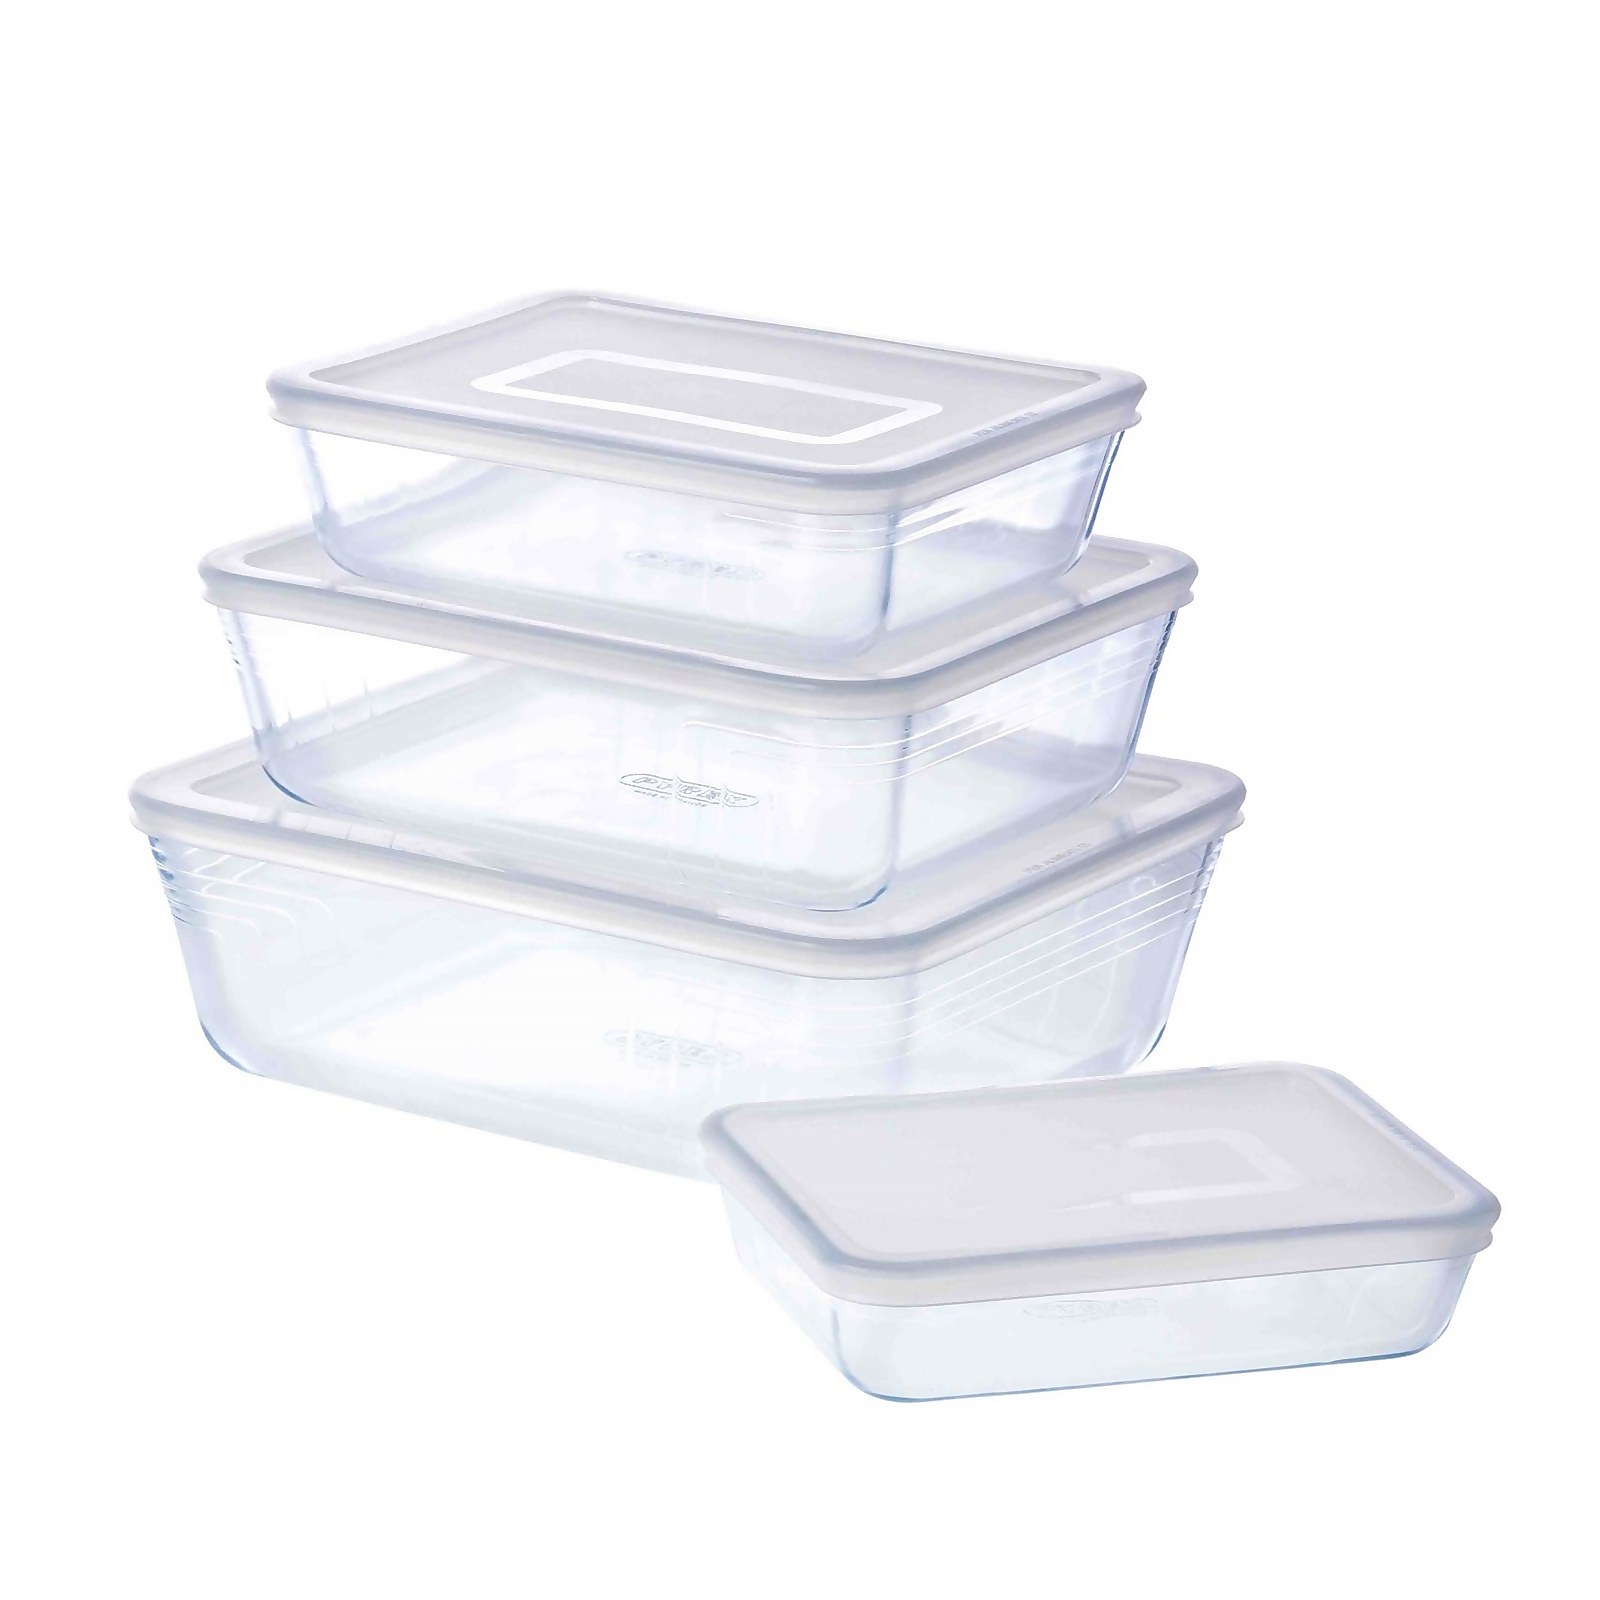 Photo of Pyrex Cook & Freeze Rectangular 4 Piece Food Storage Set - White